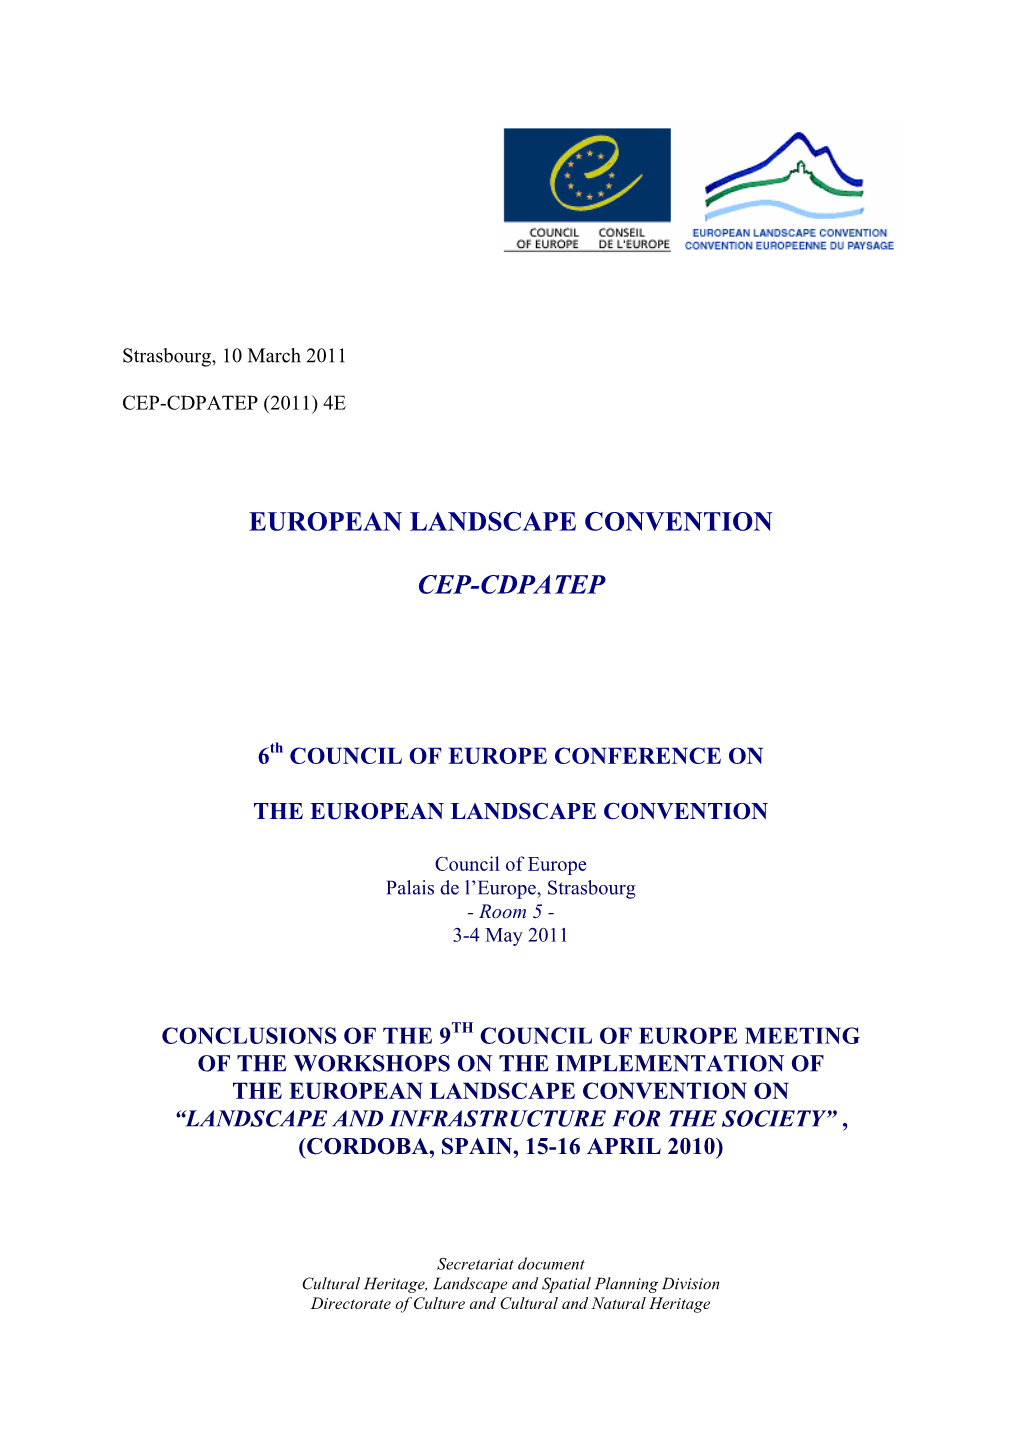 European Landscape Convention Cep-Cdpatep